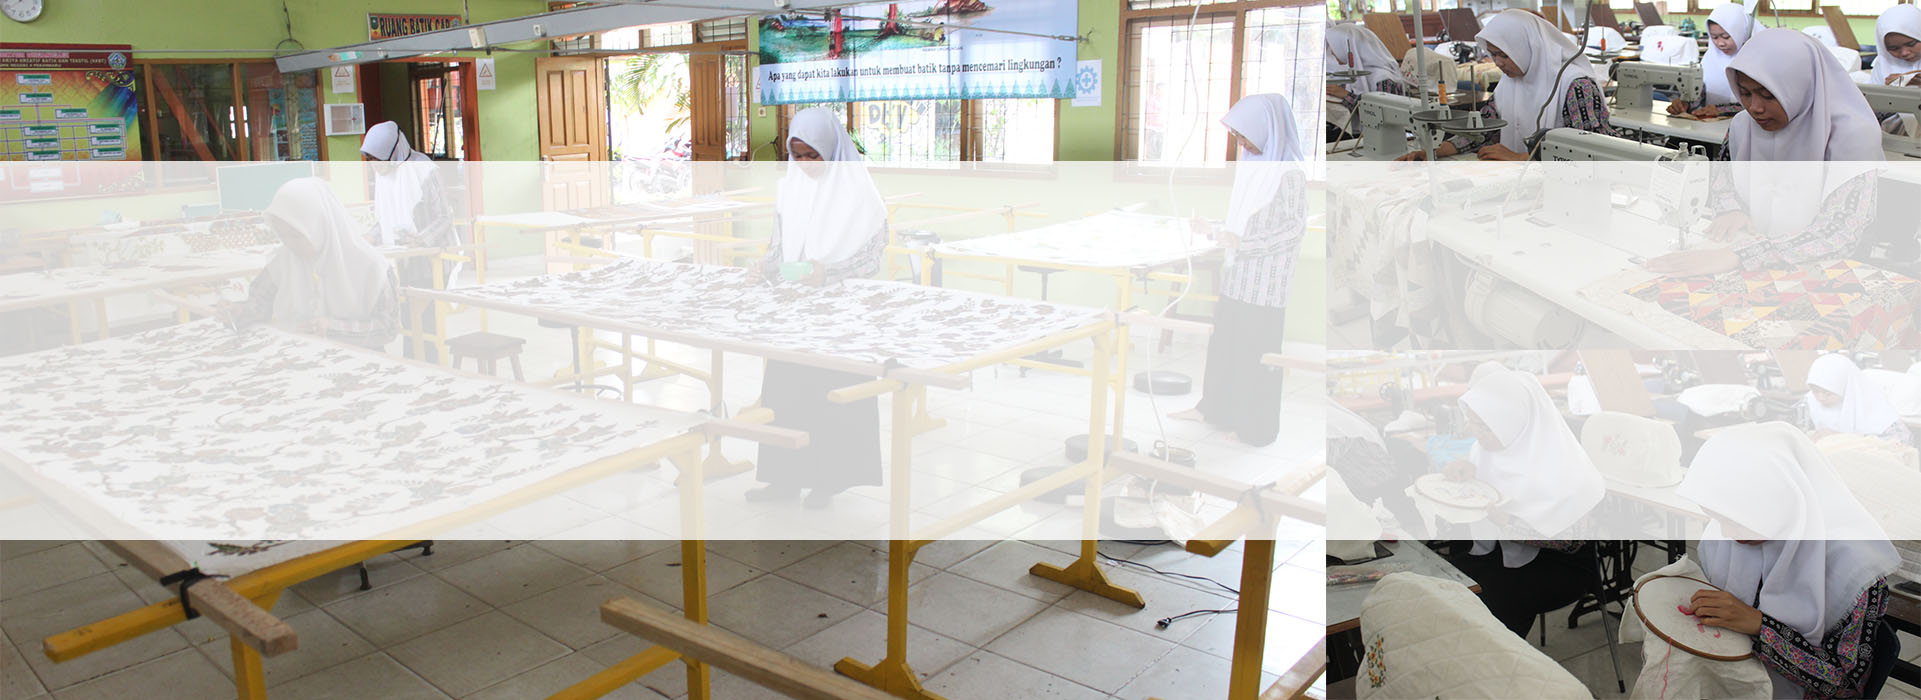 Program Keahlian Kriya Kreatif Batik dan Tekstil